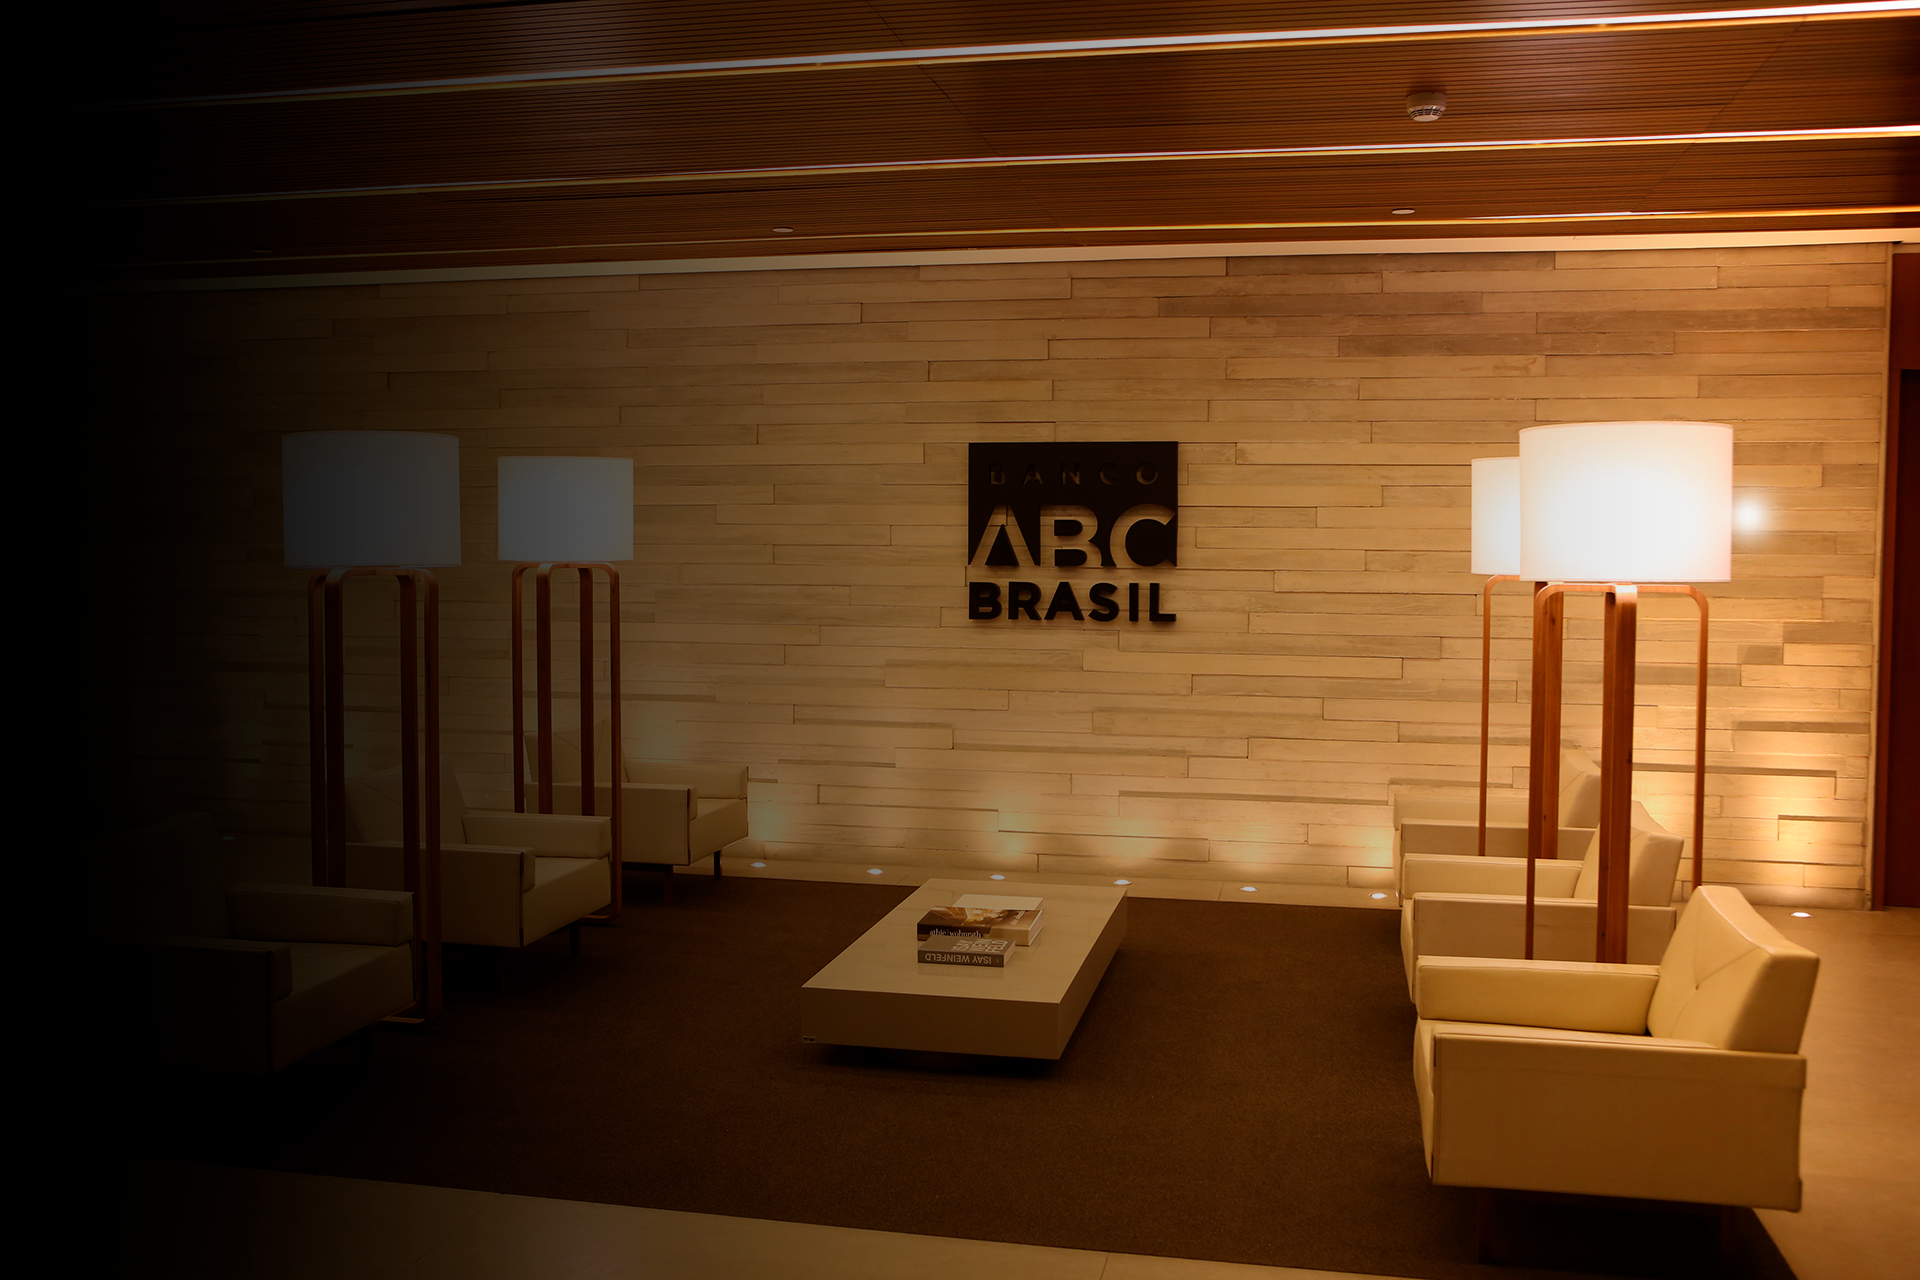 Banco ABC